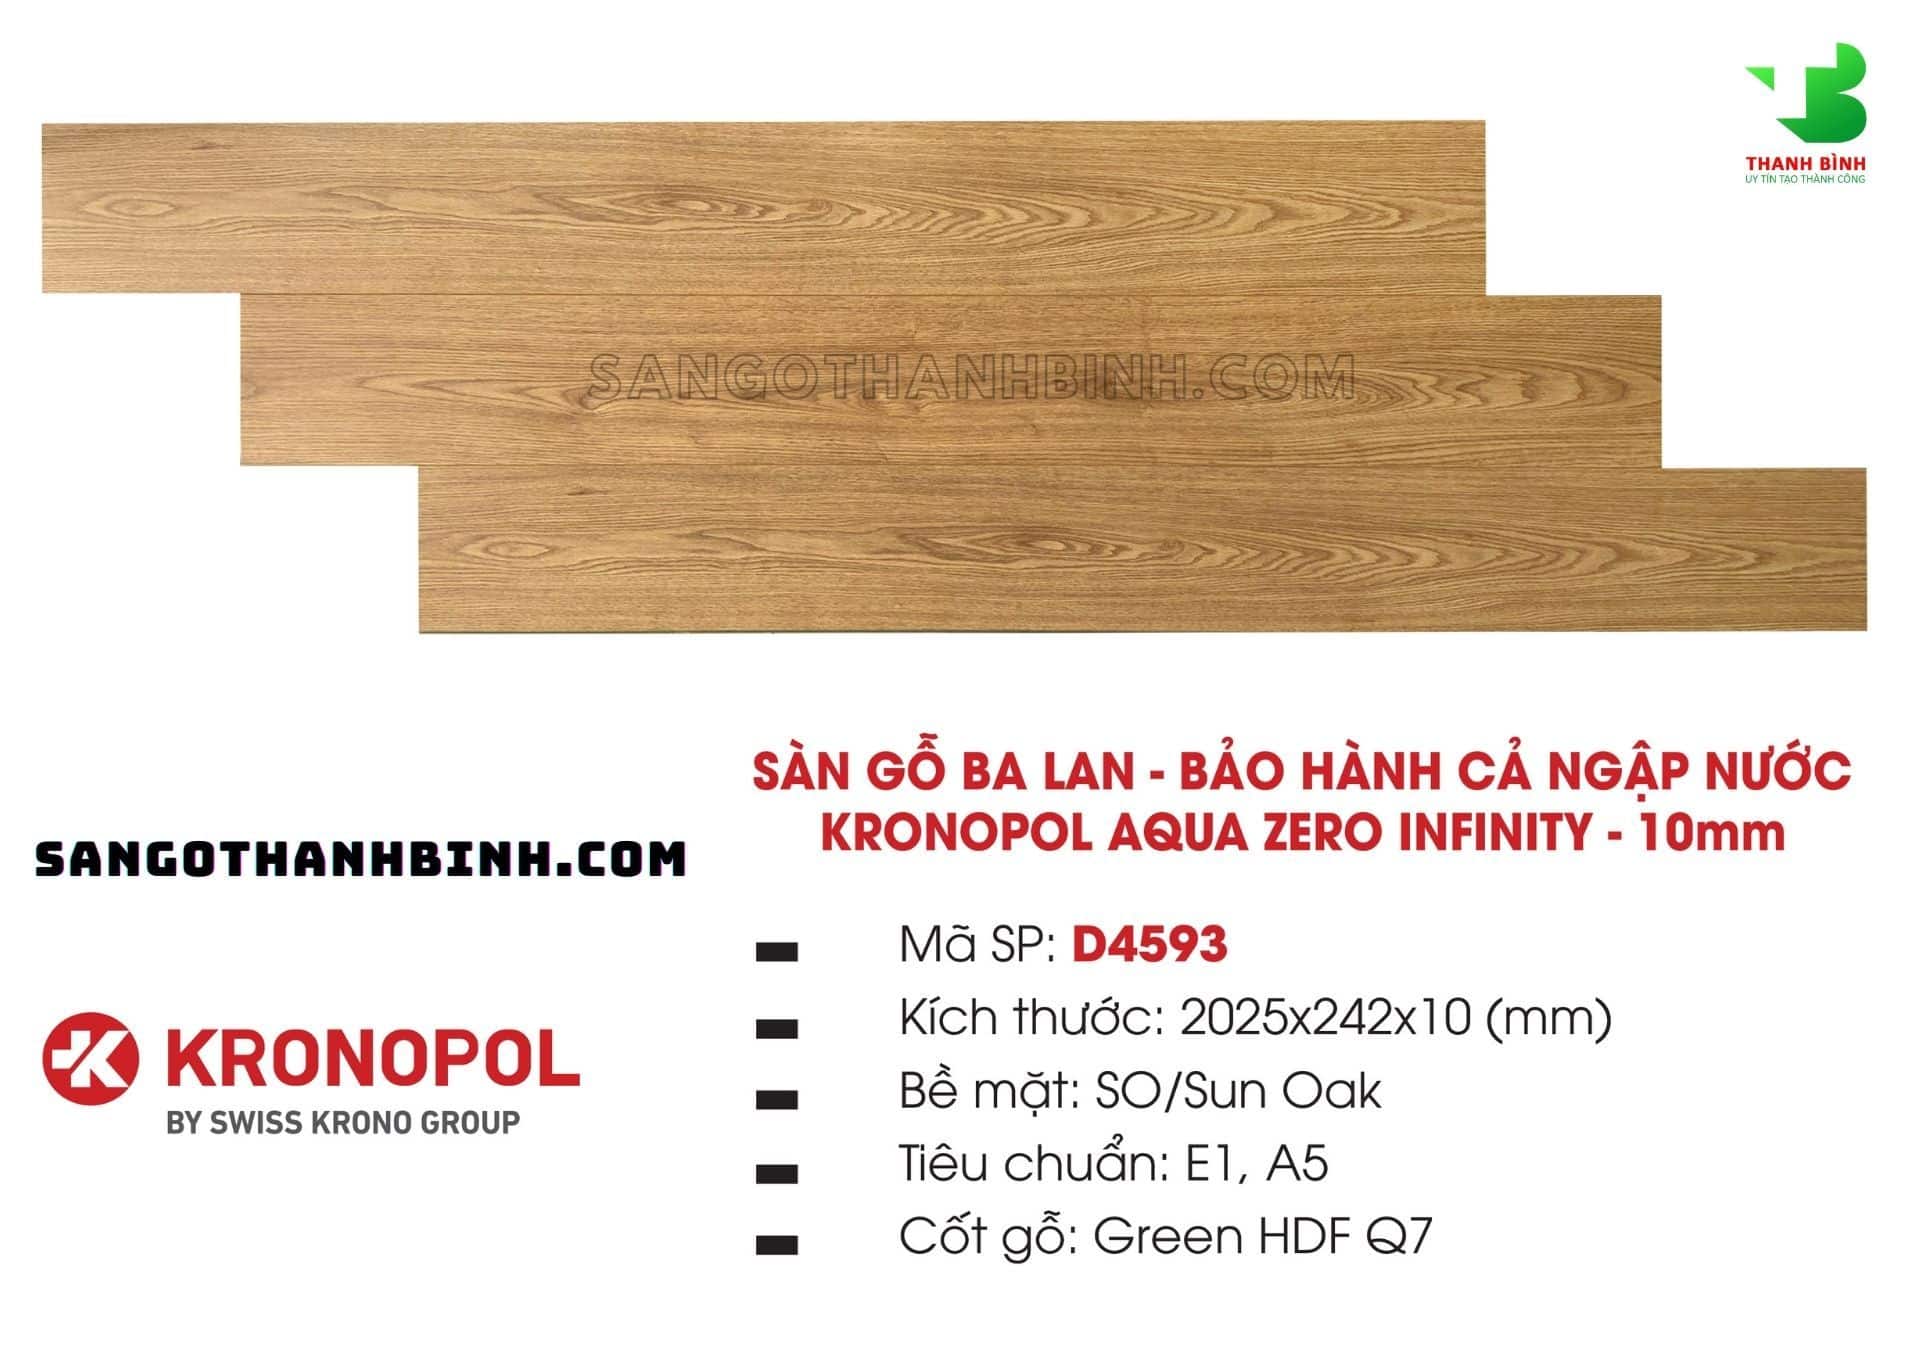 San Go Kronopol Aqua Infinity 10mm Ma D45933